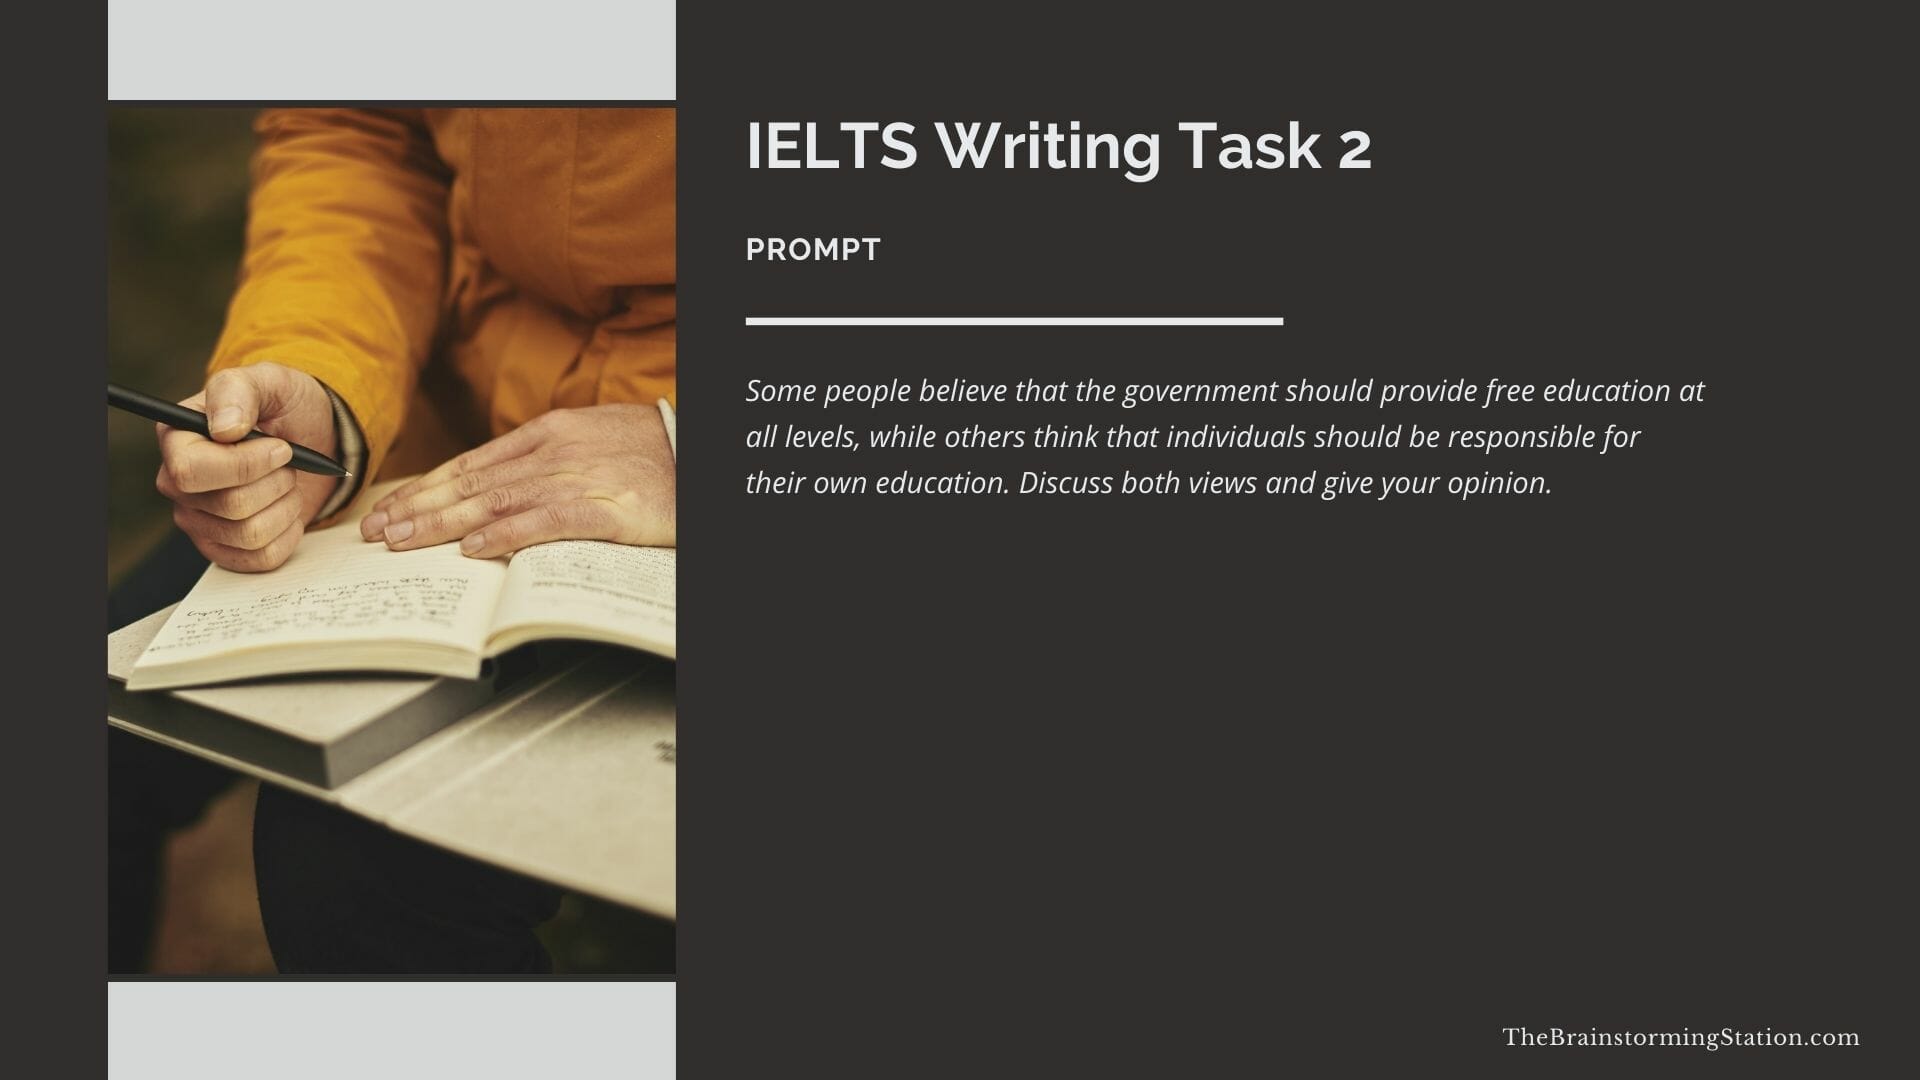 Sample IELTS Writing Task 2 Prompt